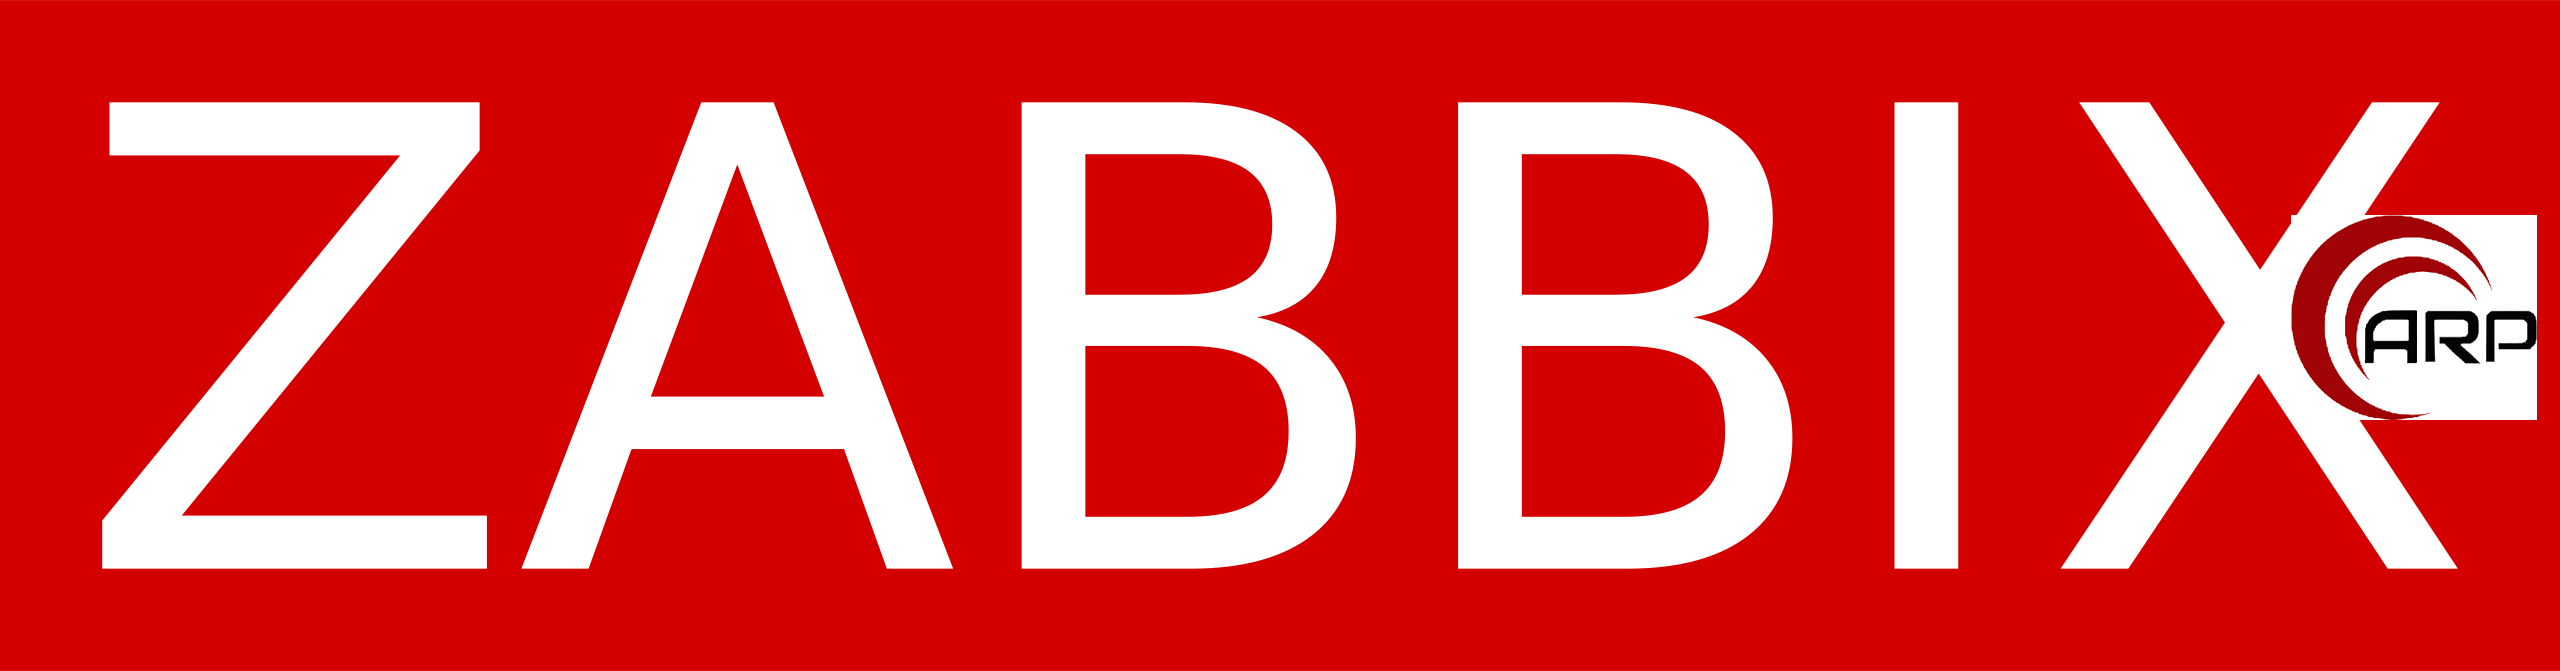 Zabbix_arp-network-incomplete-check-logo.svg